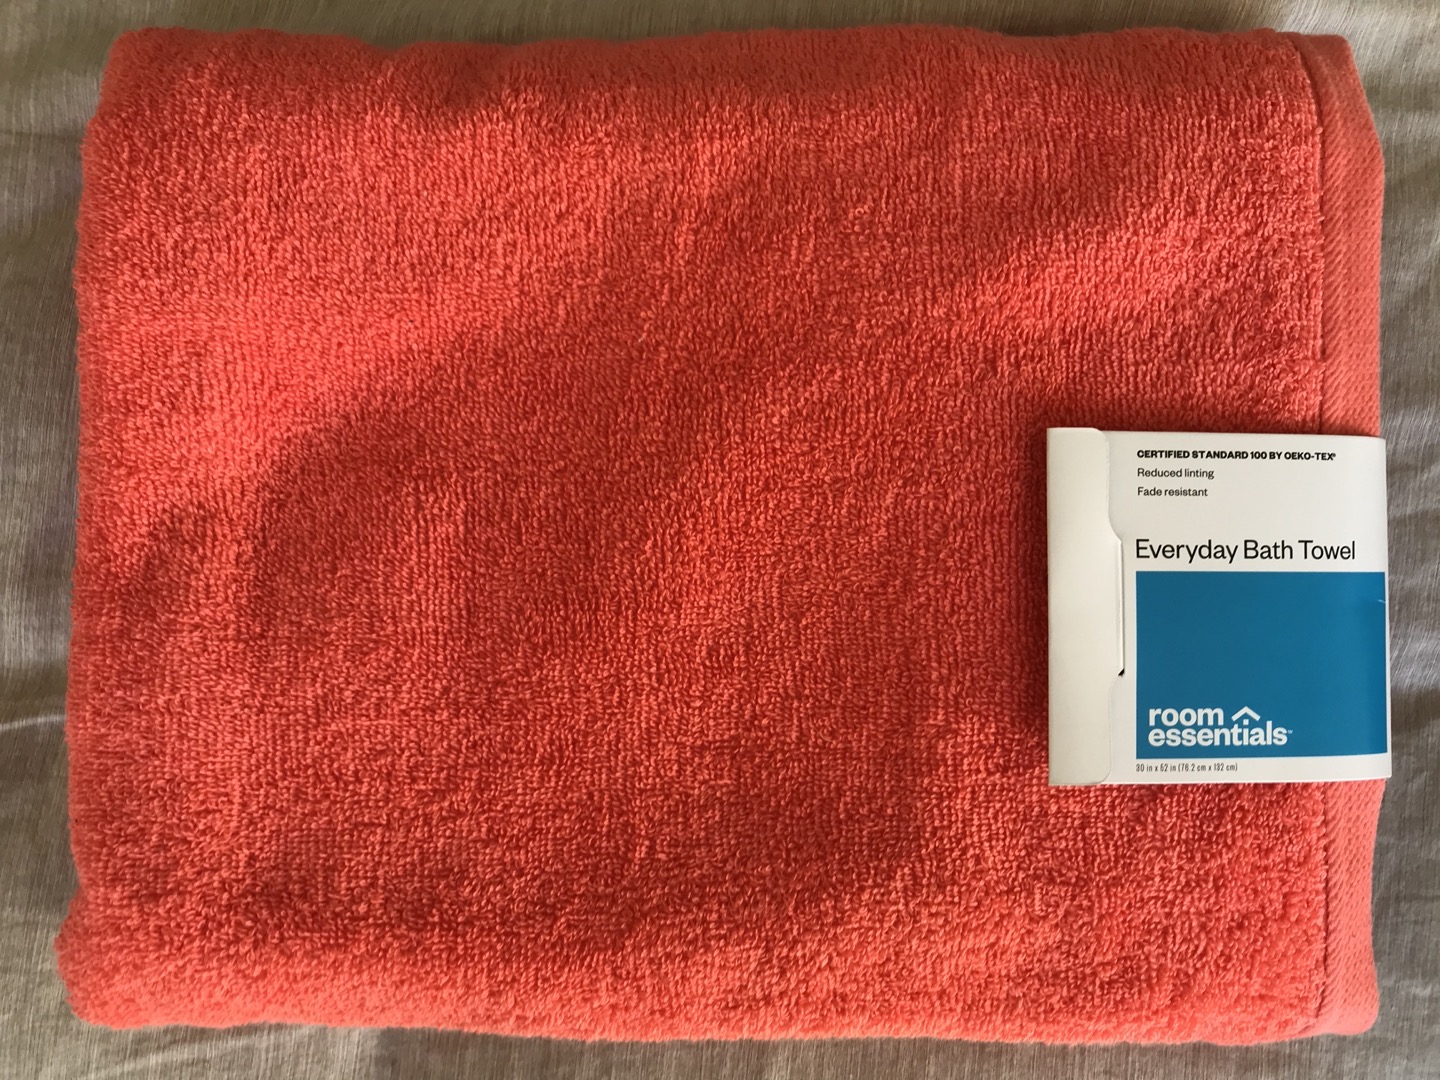 Everyday bath towel lying on bed